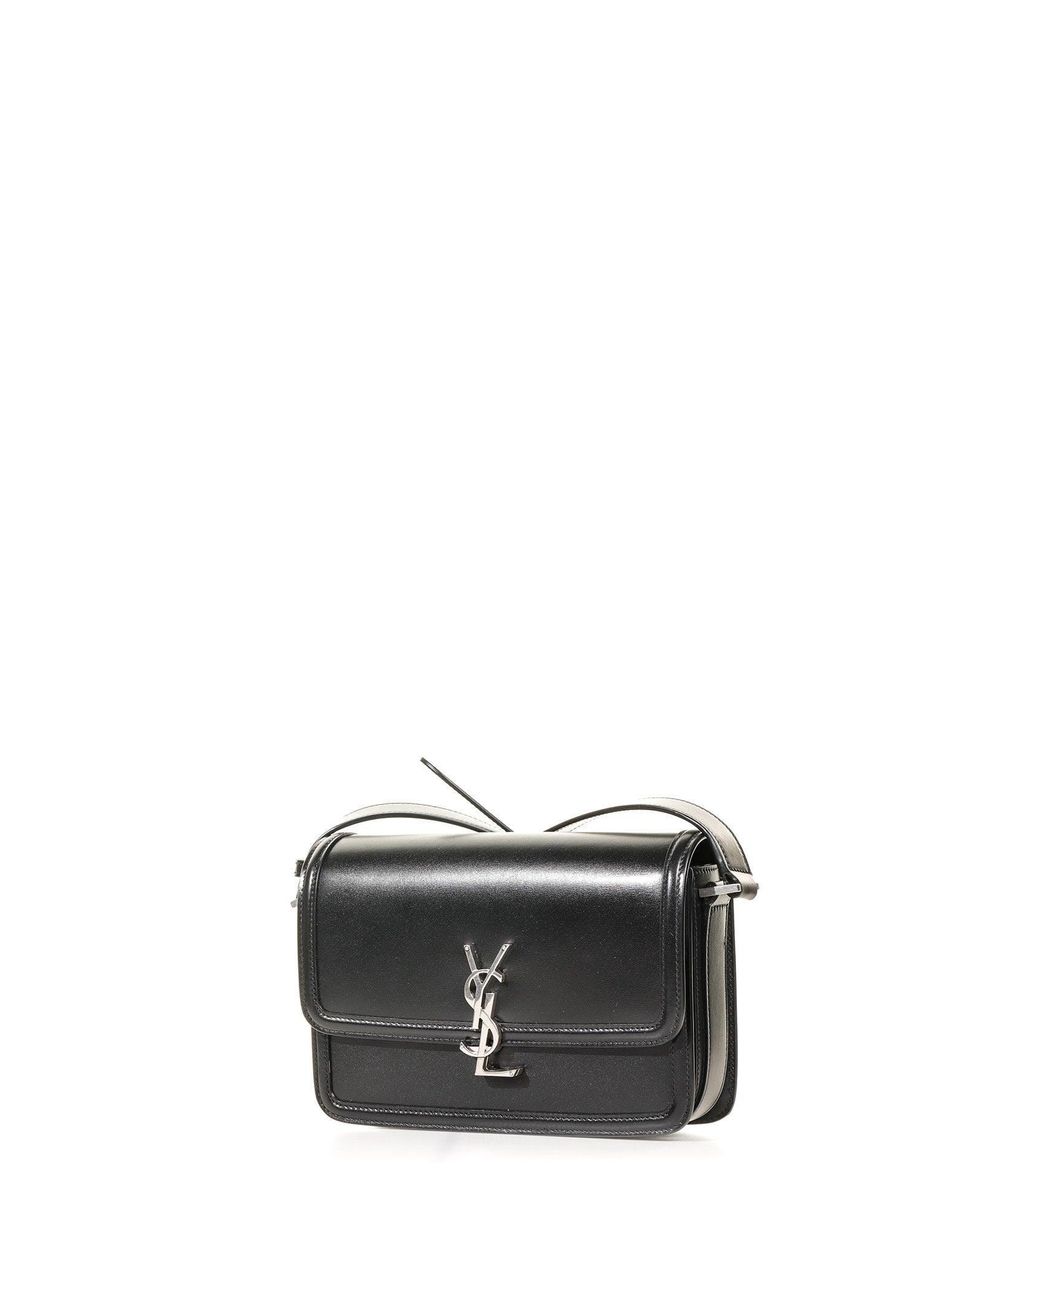 Black Solferino medium YSL-plaque leather shoulder bag, Saint Laurent